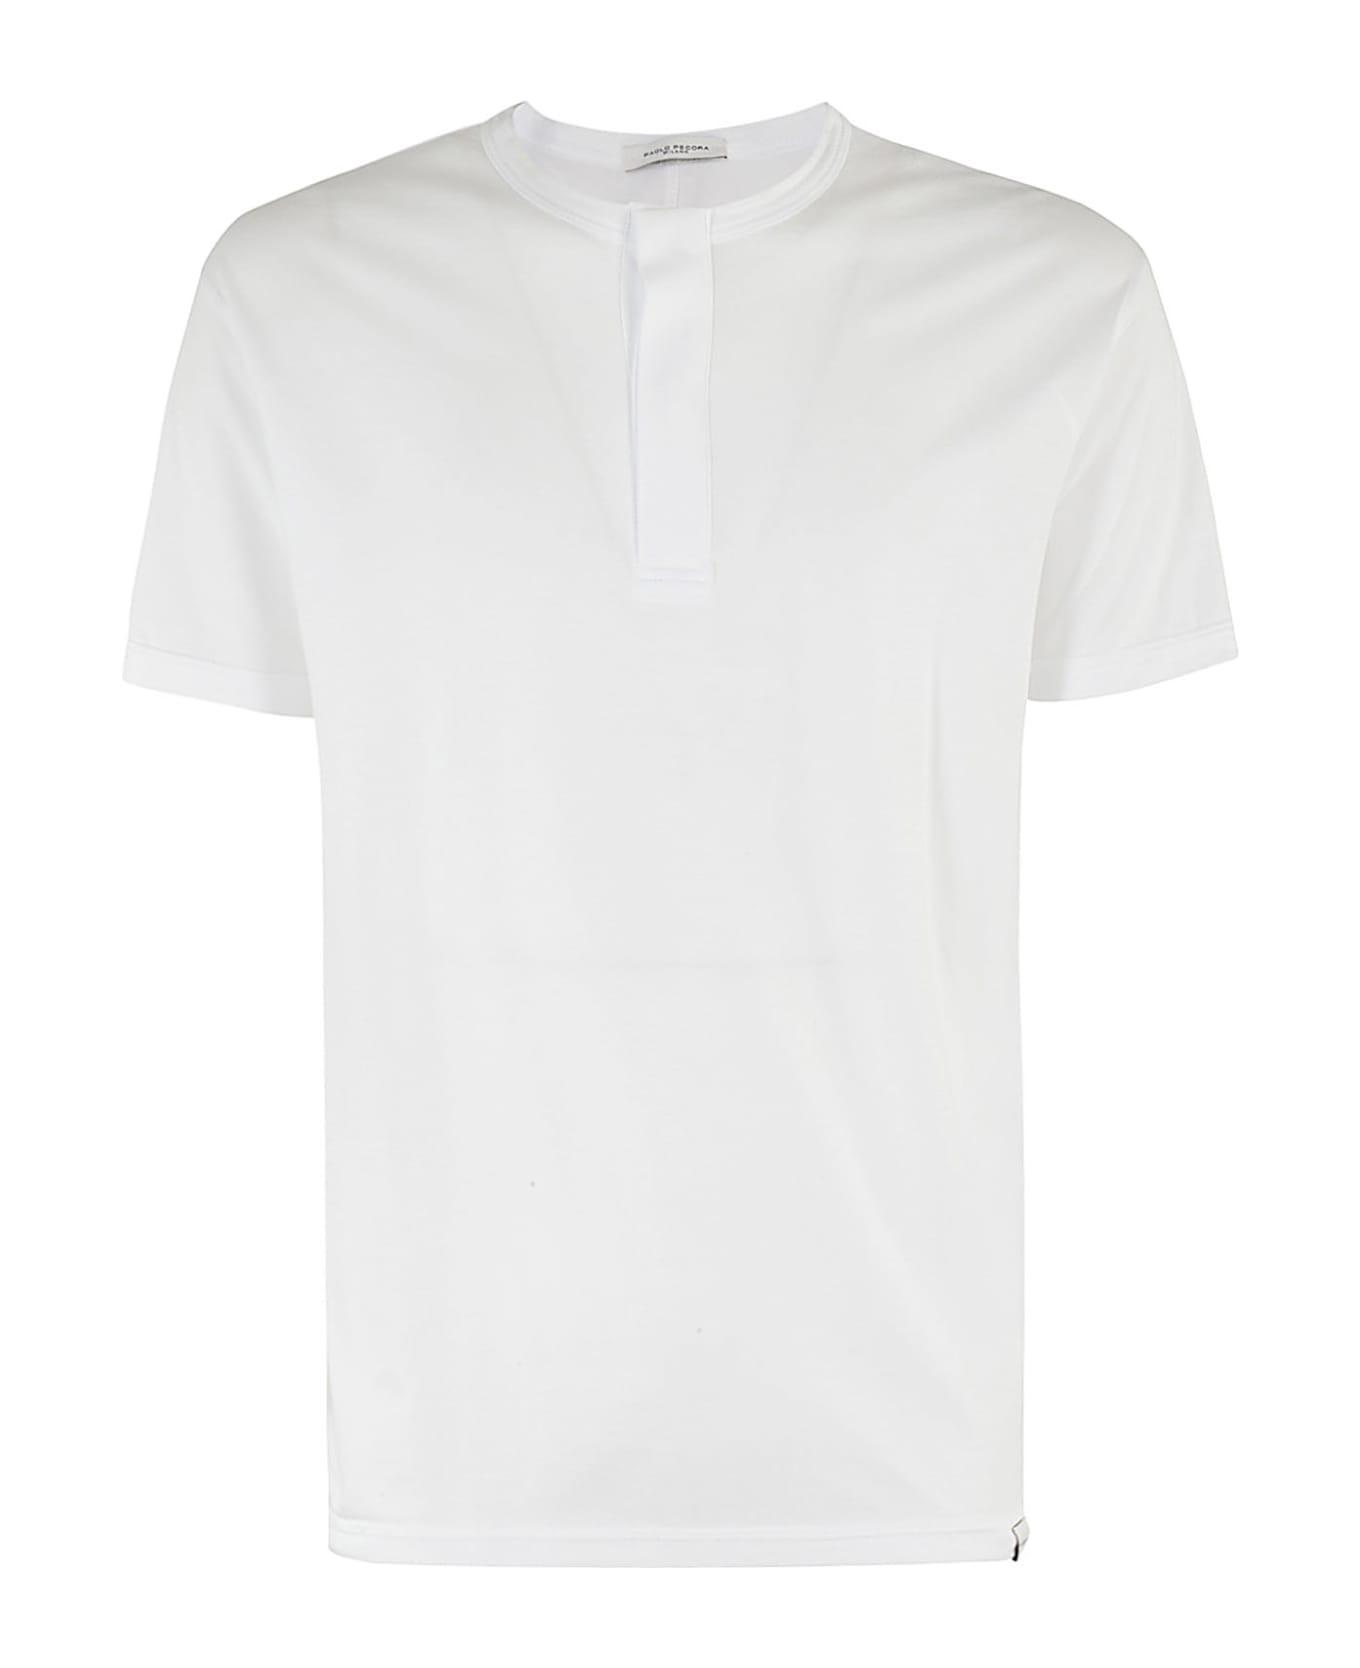 Paolo Pecora T Shirt Jersey - Bianco Ottico シャツ